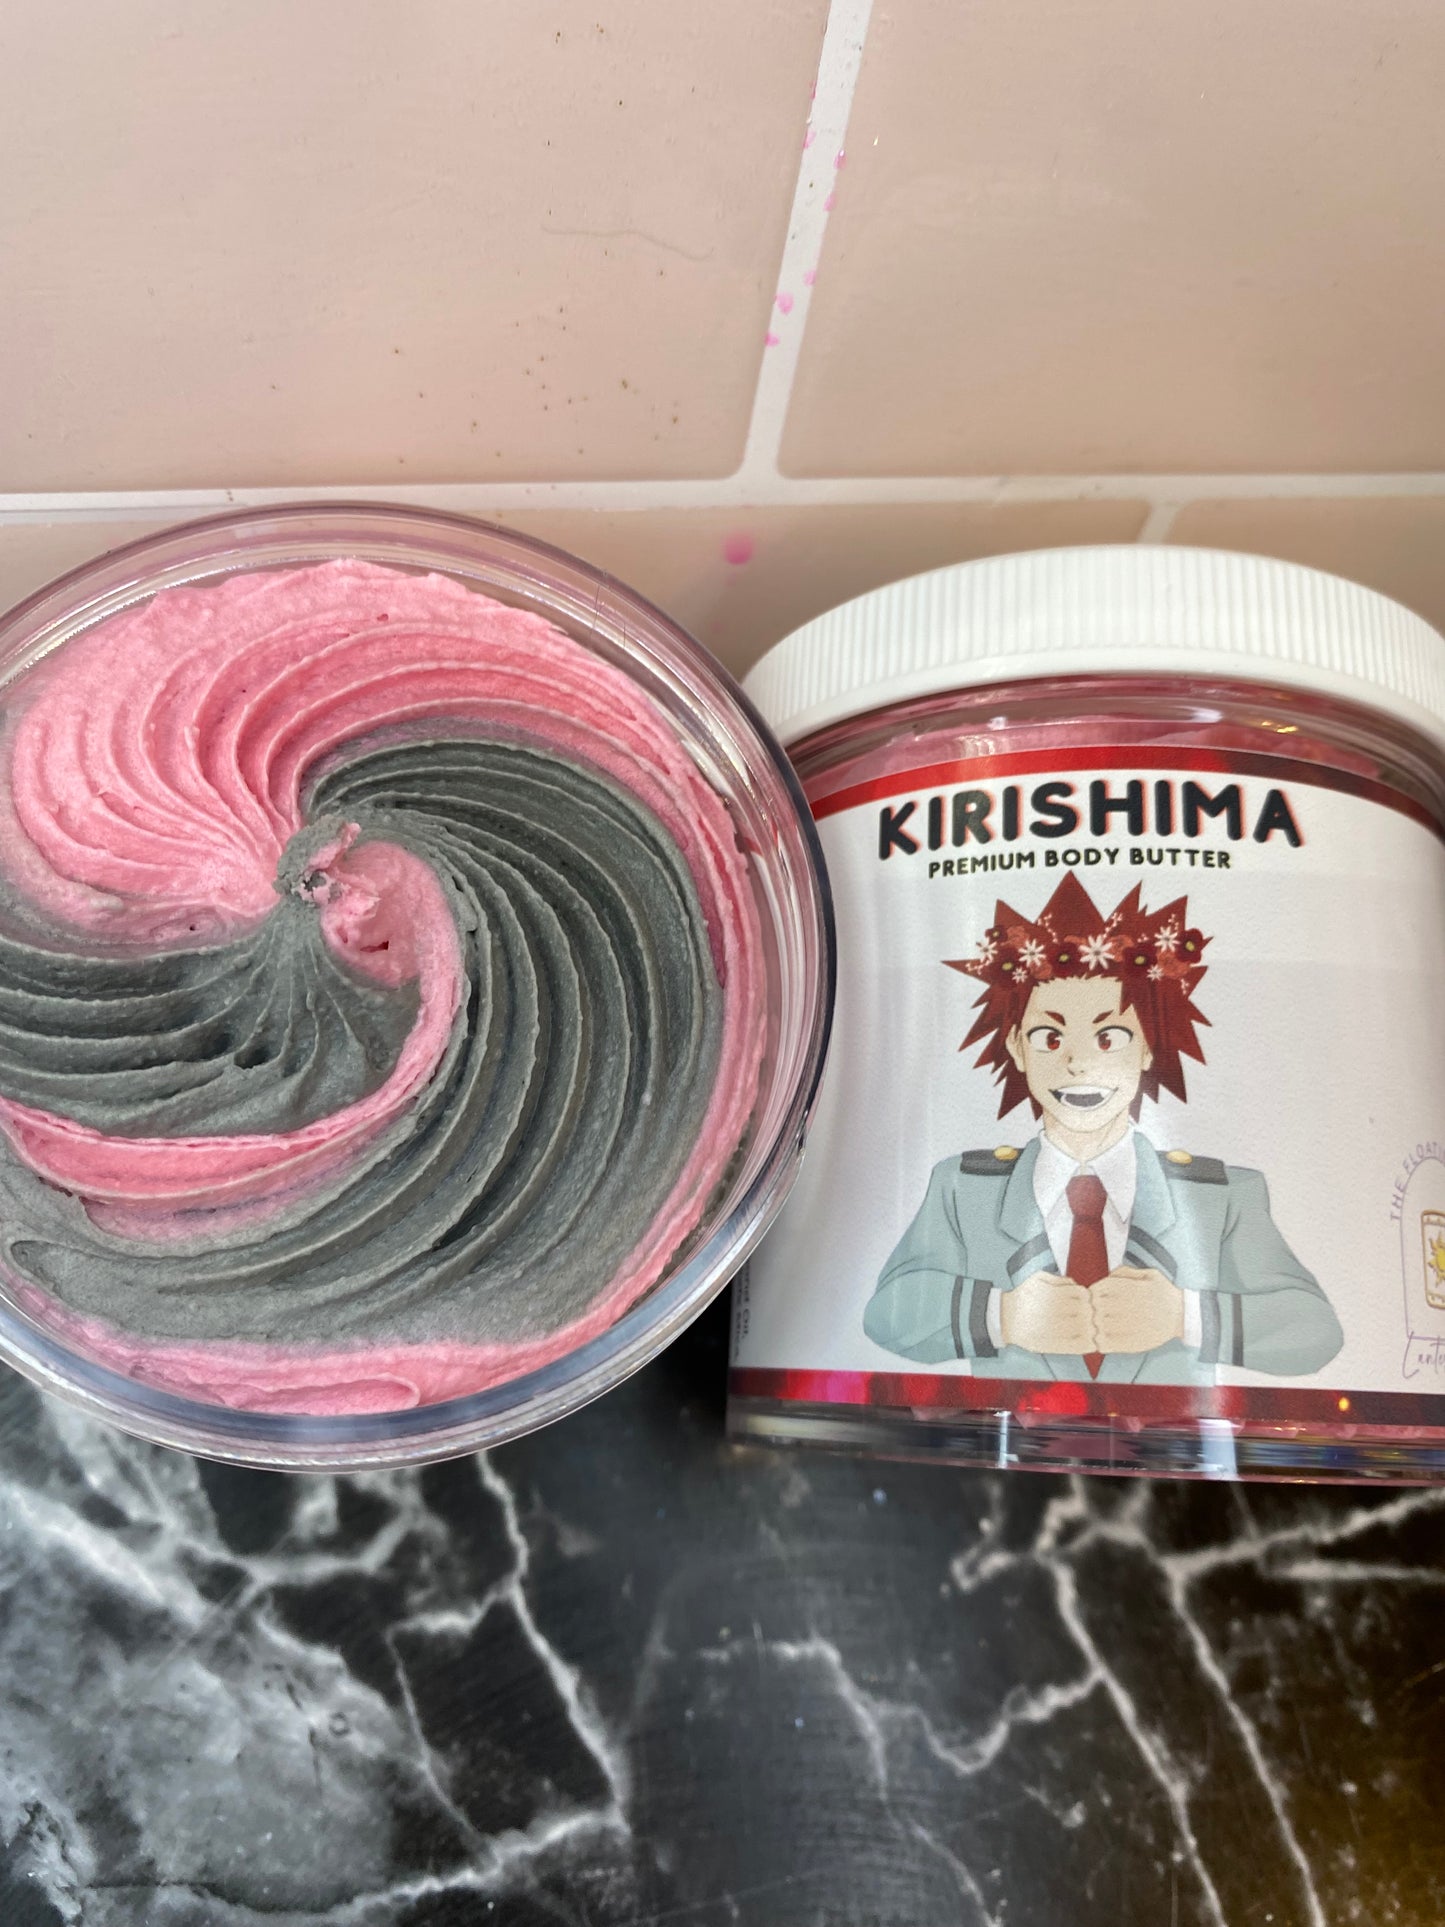 Kirishima Body Butter